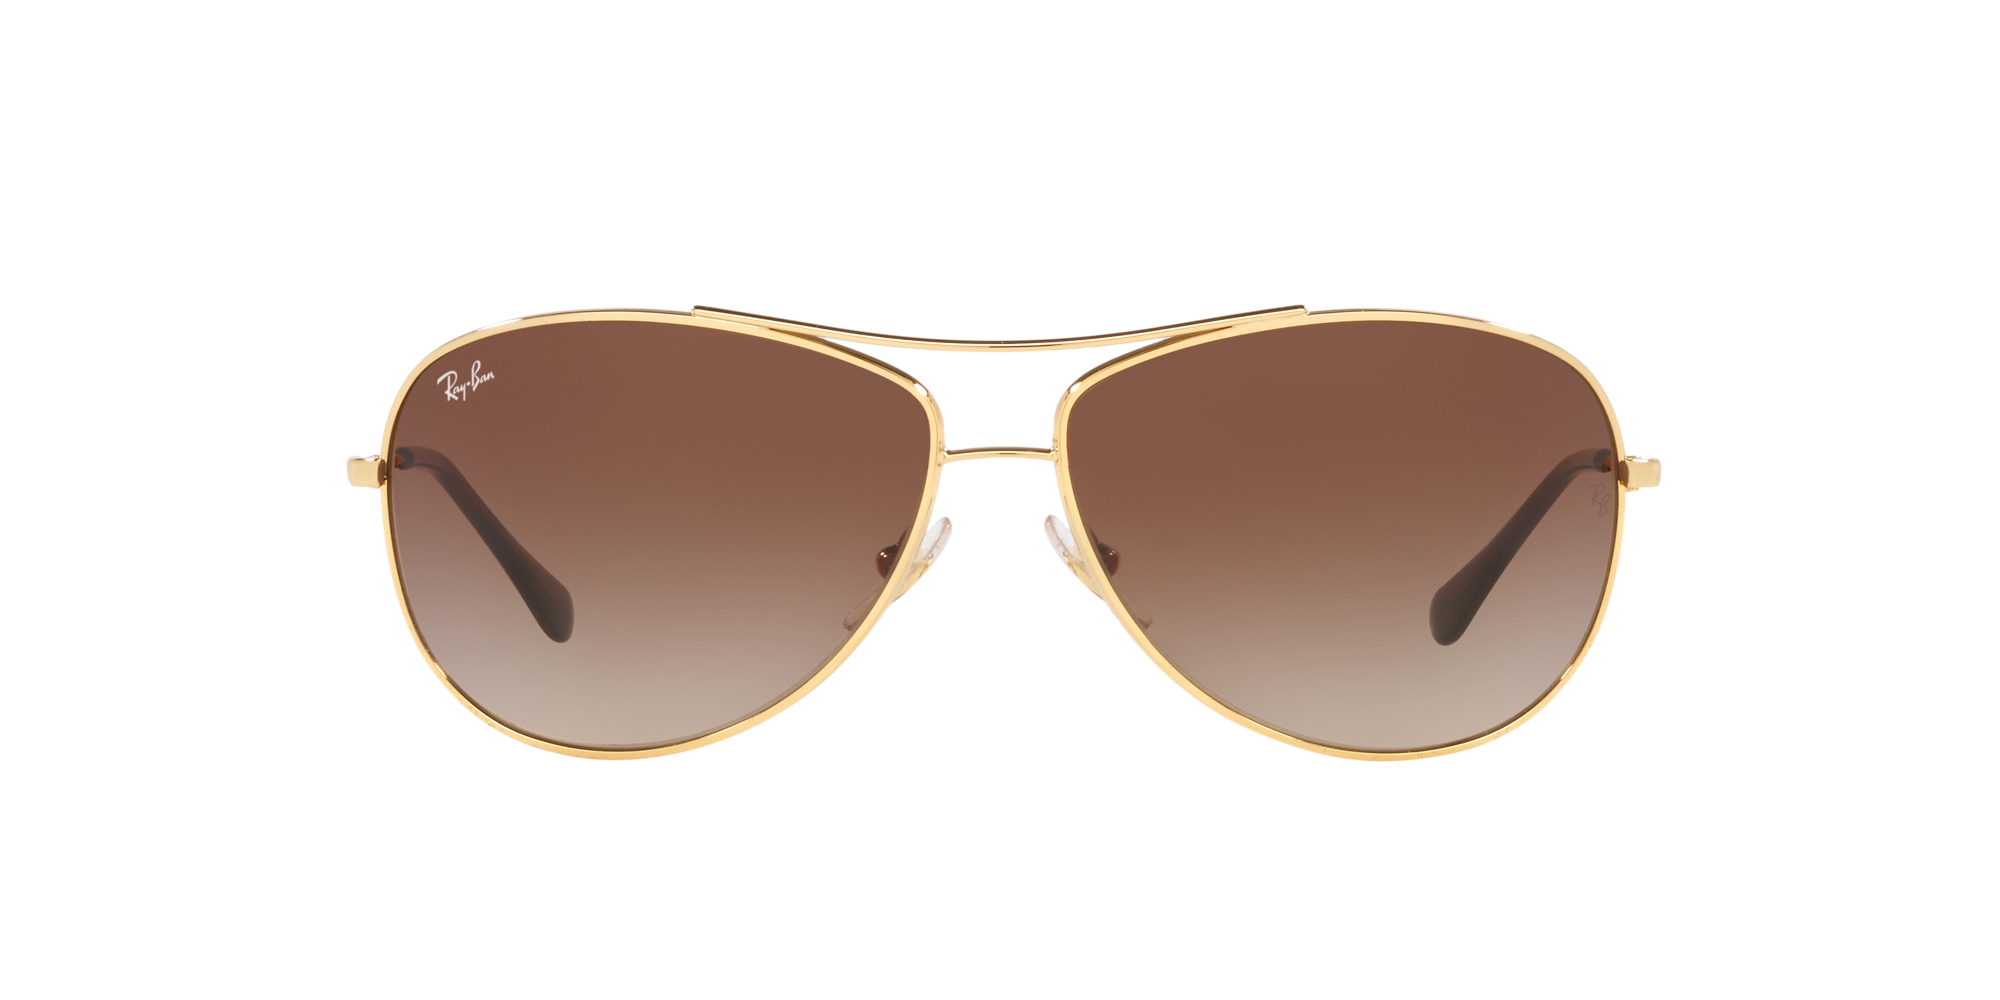 Shop +Beryll Mellow Tortois Brown Gradient Rectangular Sunglasses Online |  +Beryll - +Beryll Worn By Good People